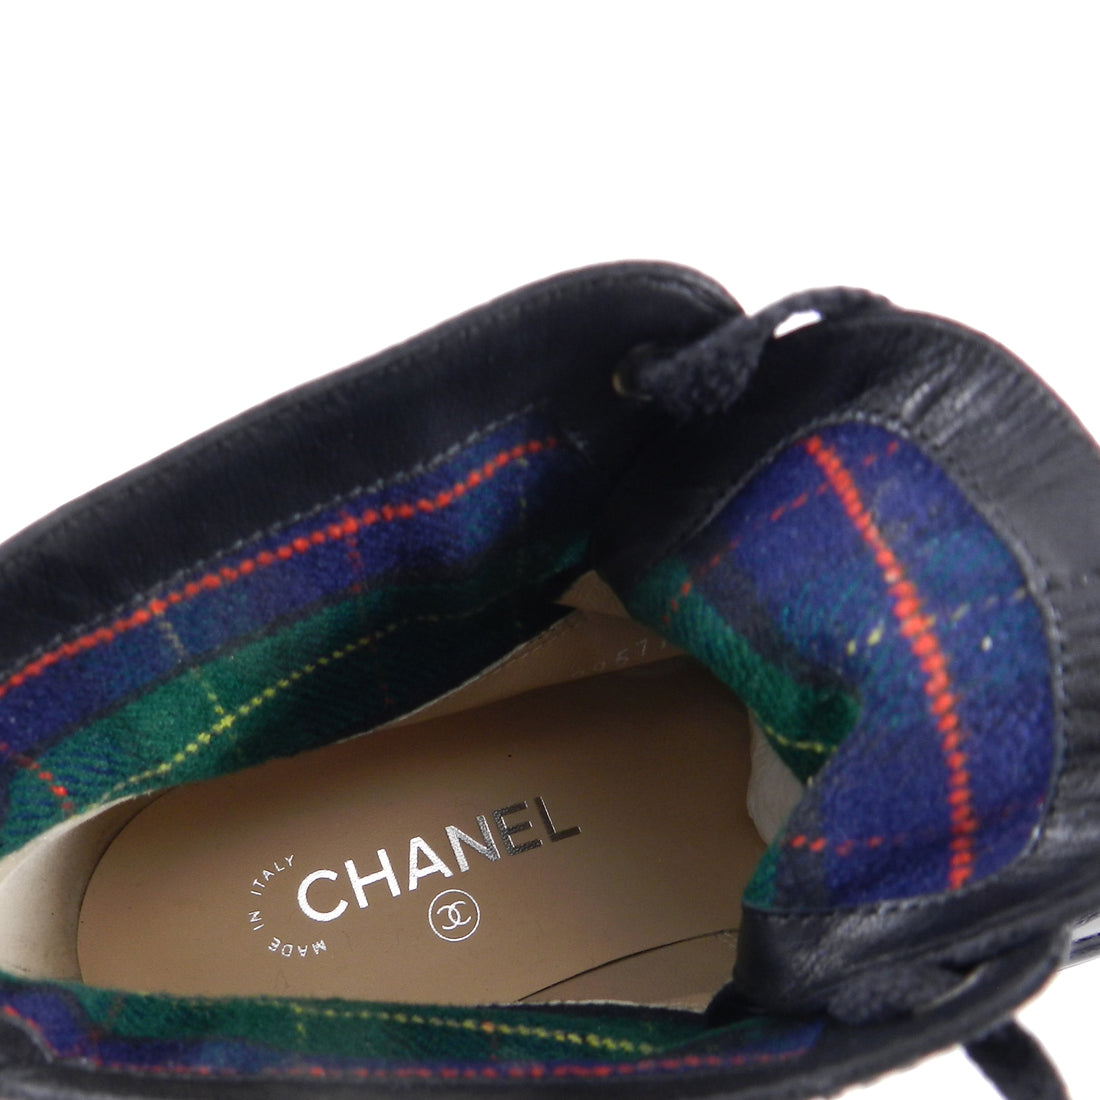 Chanel Pre-Fall 2013 Edinburgh Black Lace Up Ankle Combat Boots